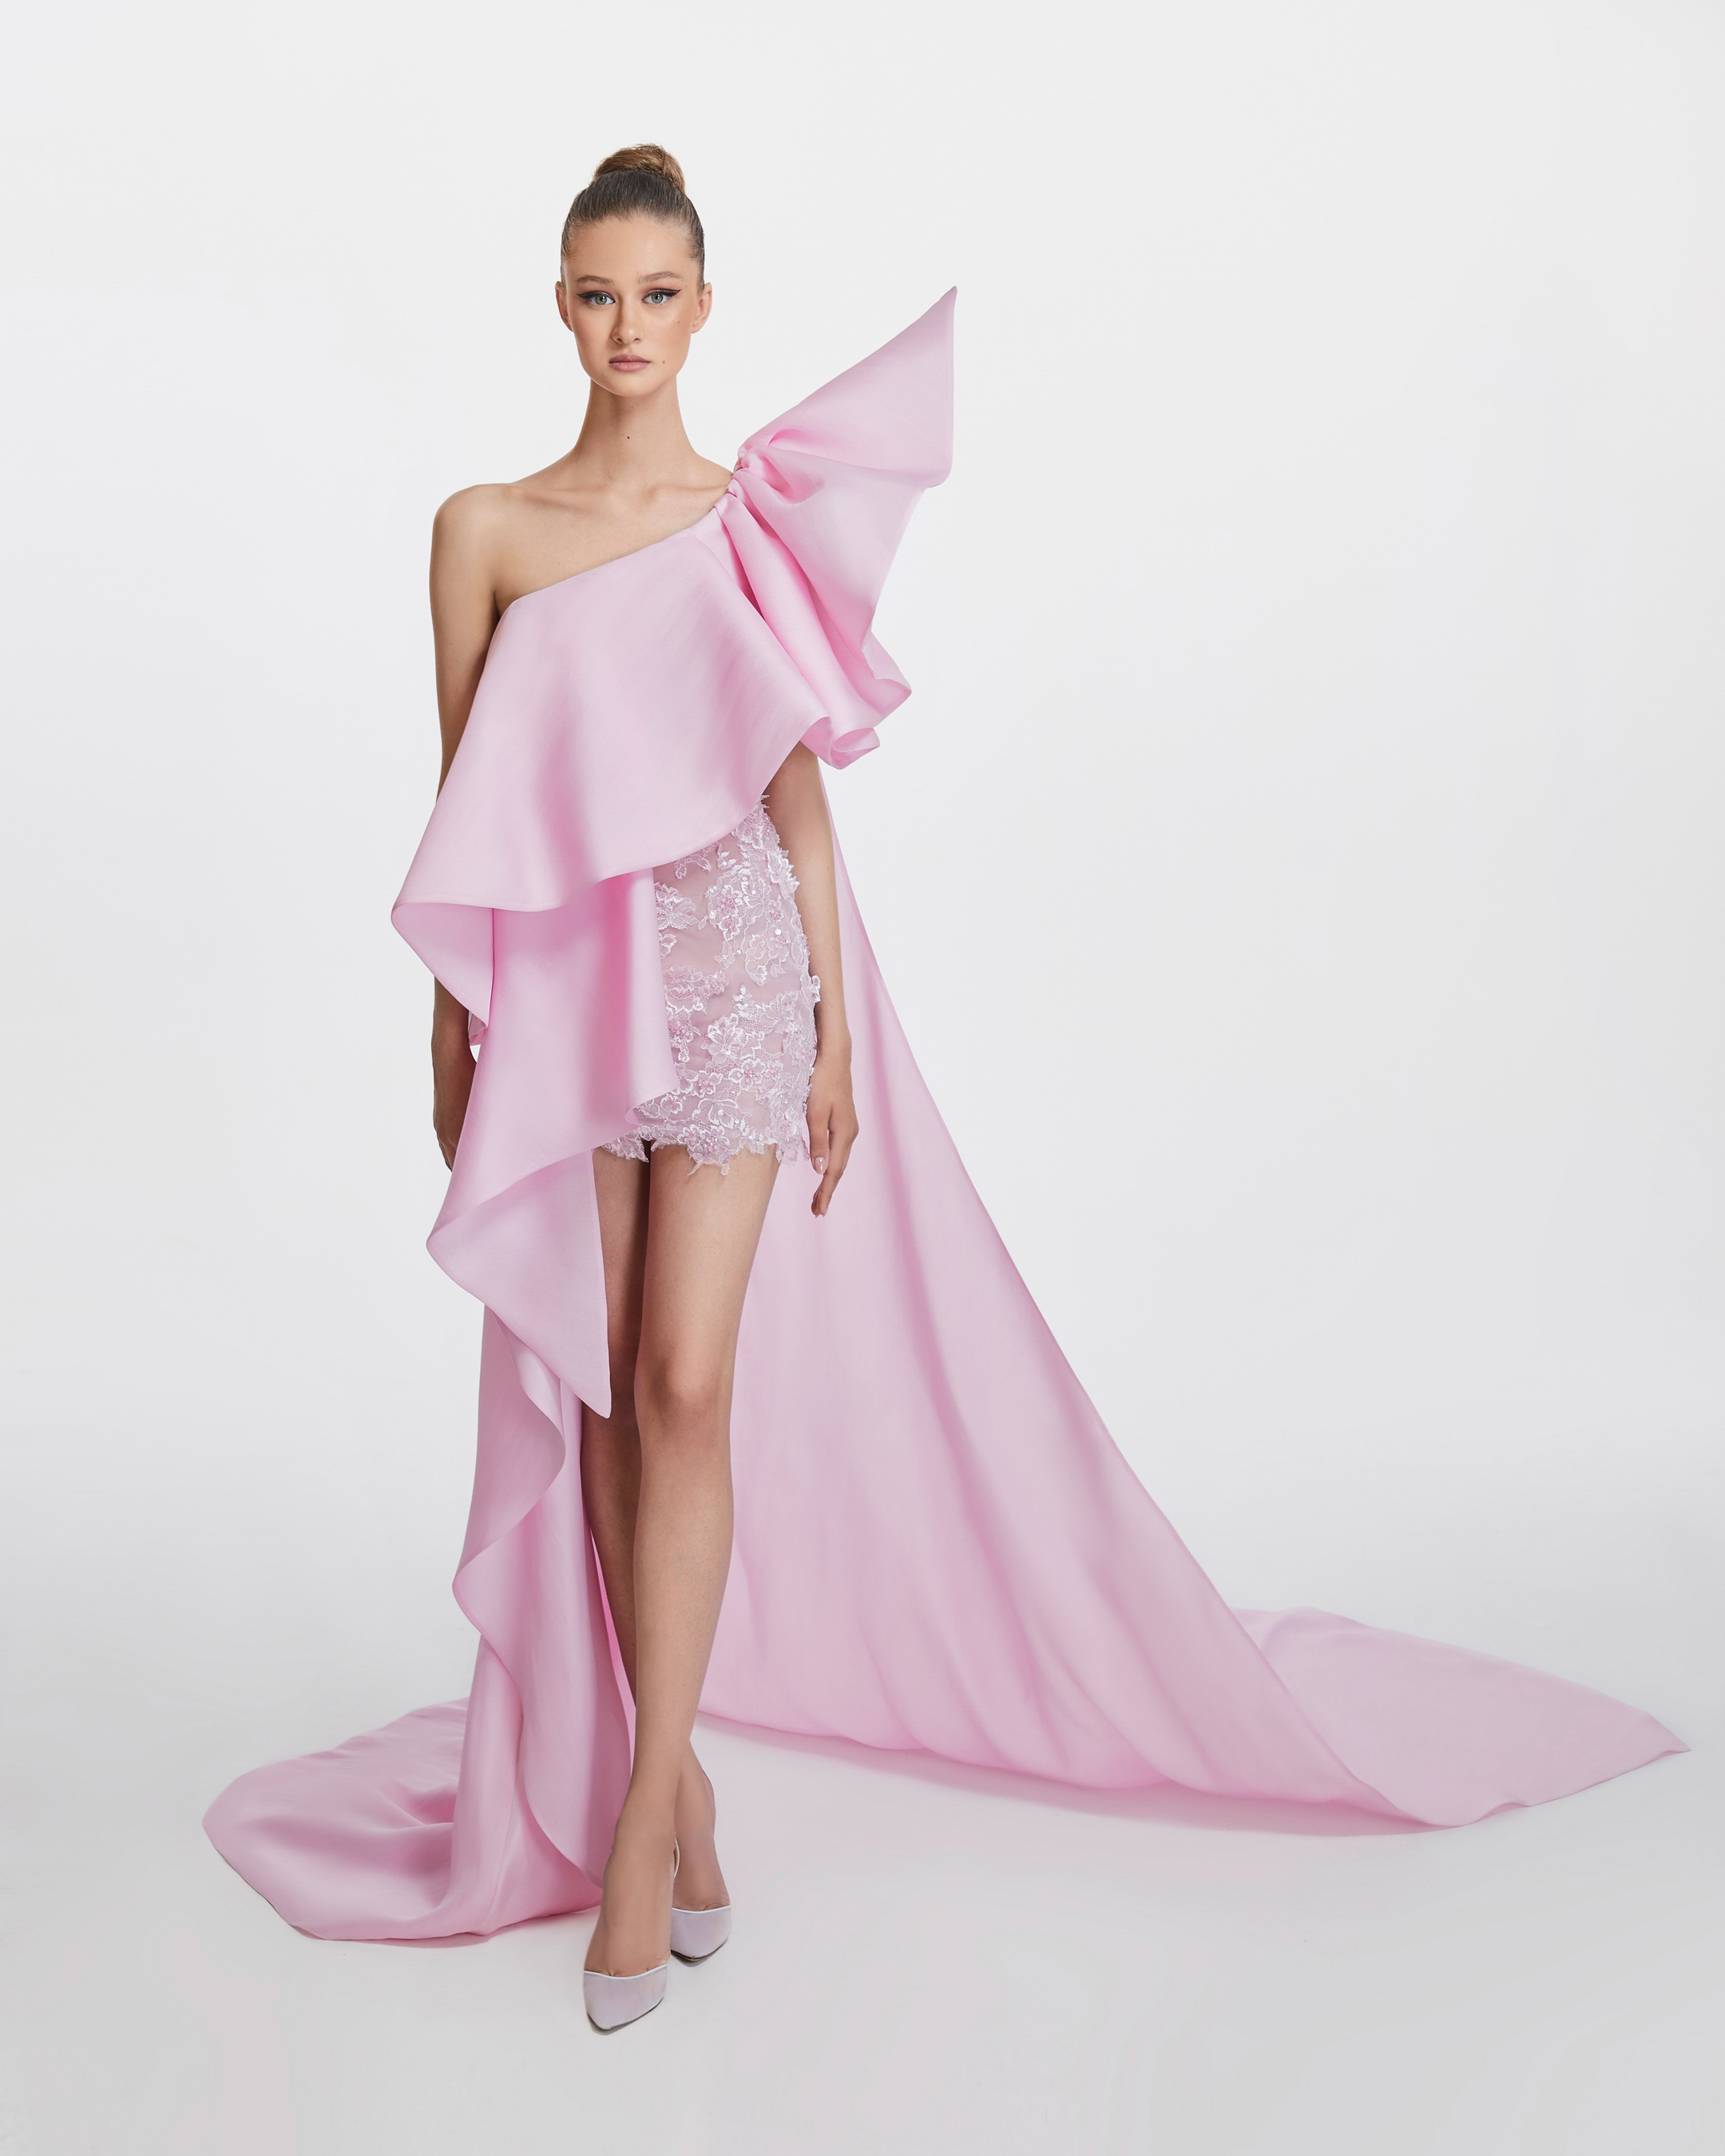 Tony Ward Fall 2021 Couture  Fashion Show